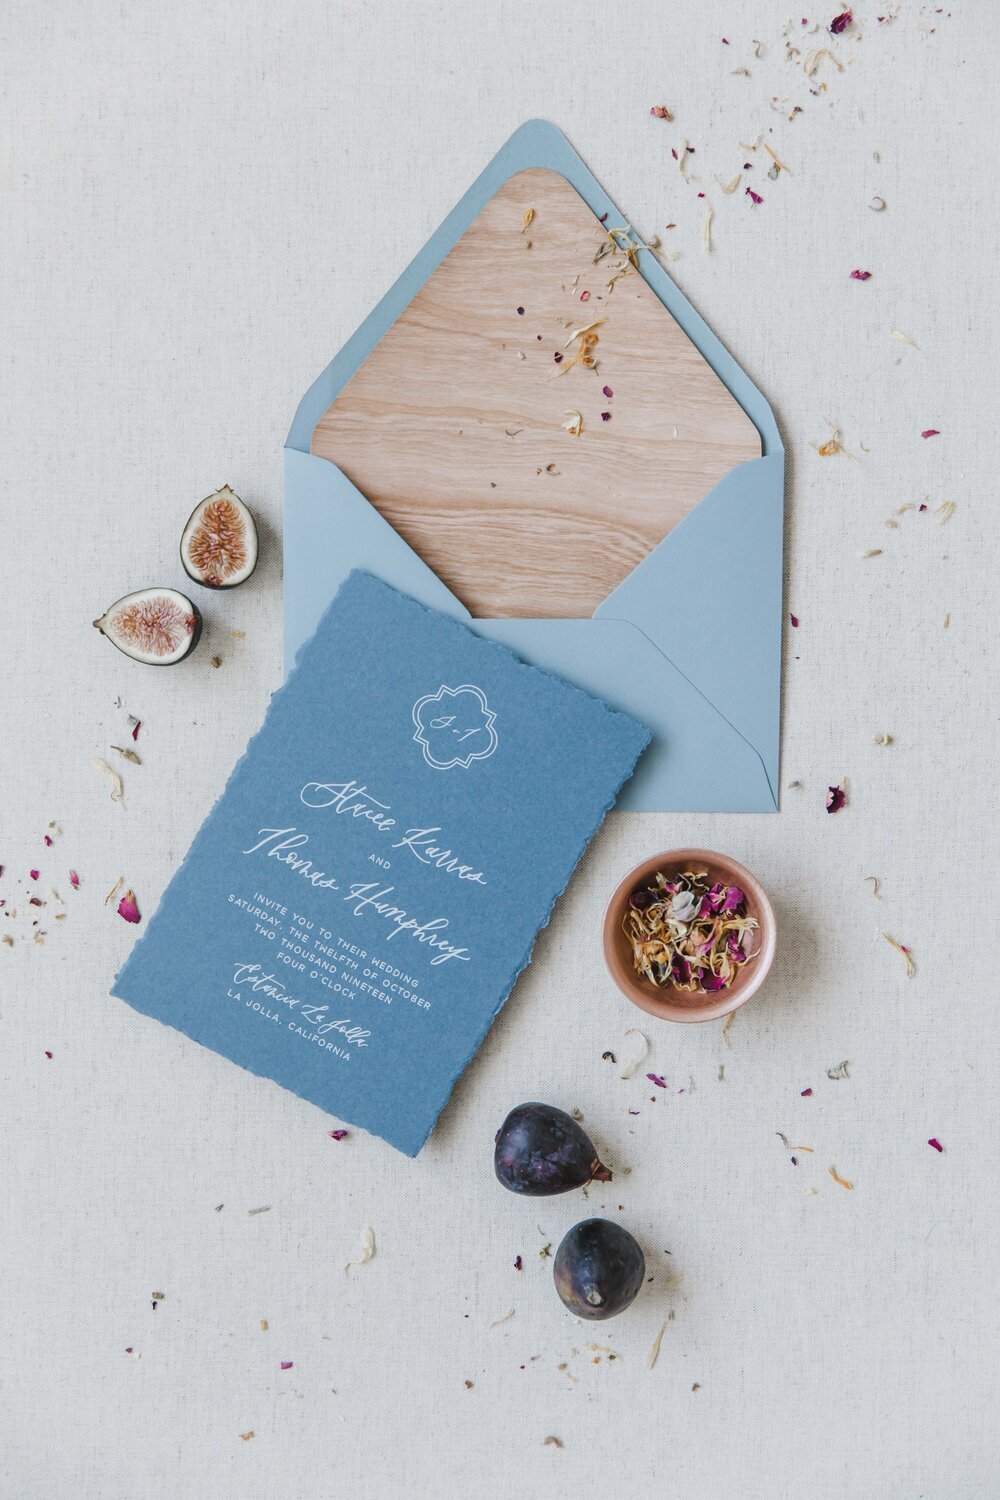 Wood+and+blue+wedding+invitations